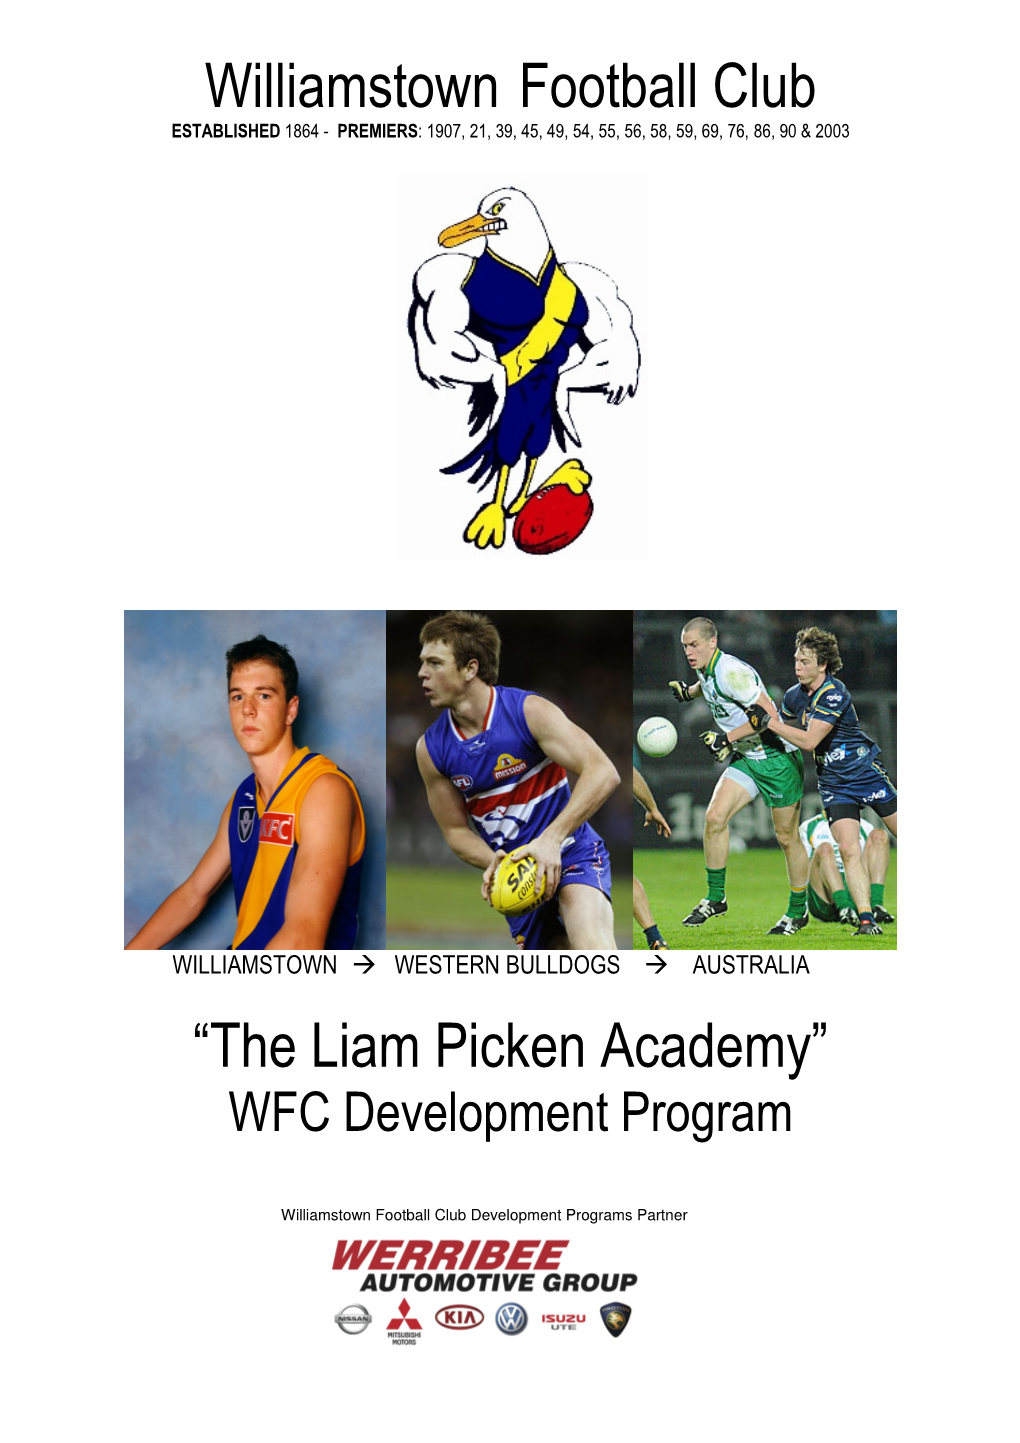 Williamstown Football Club “The Liam Picken Academy”